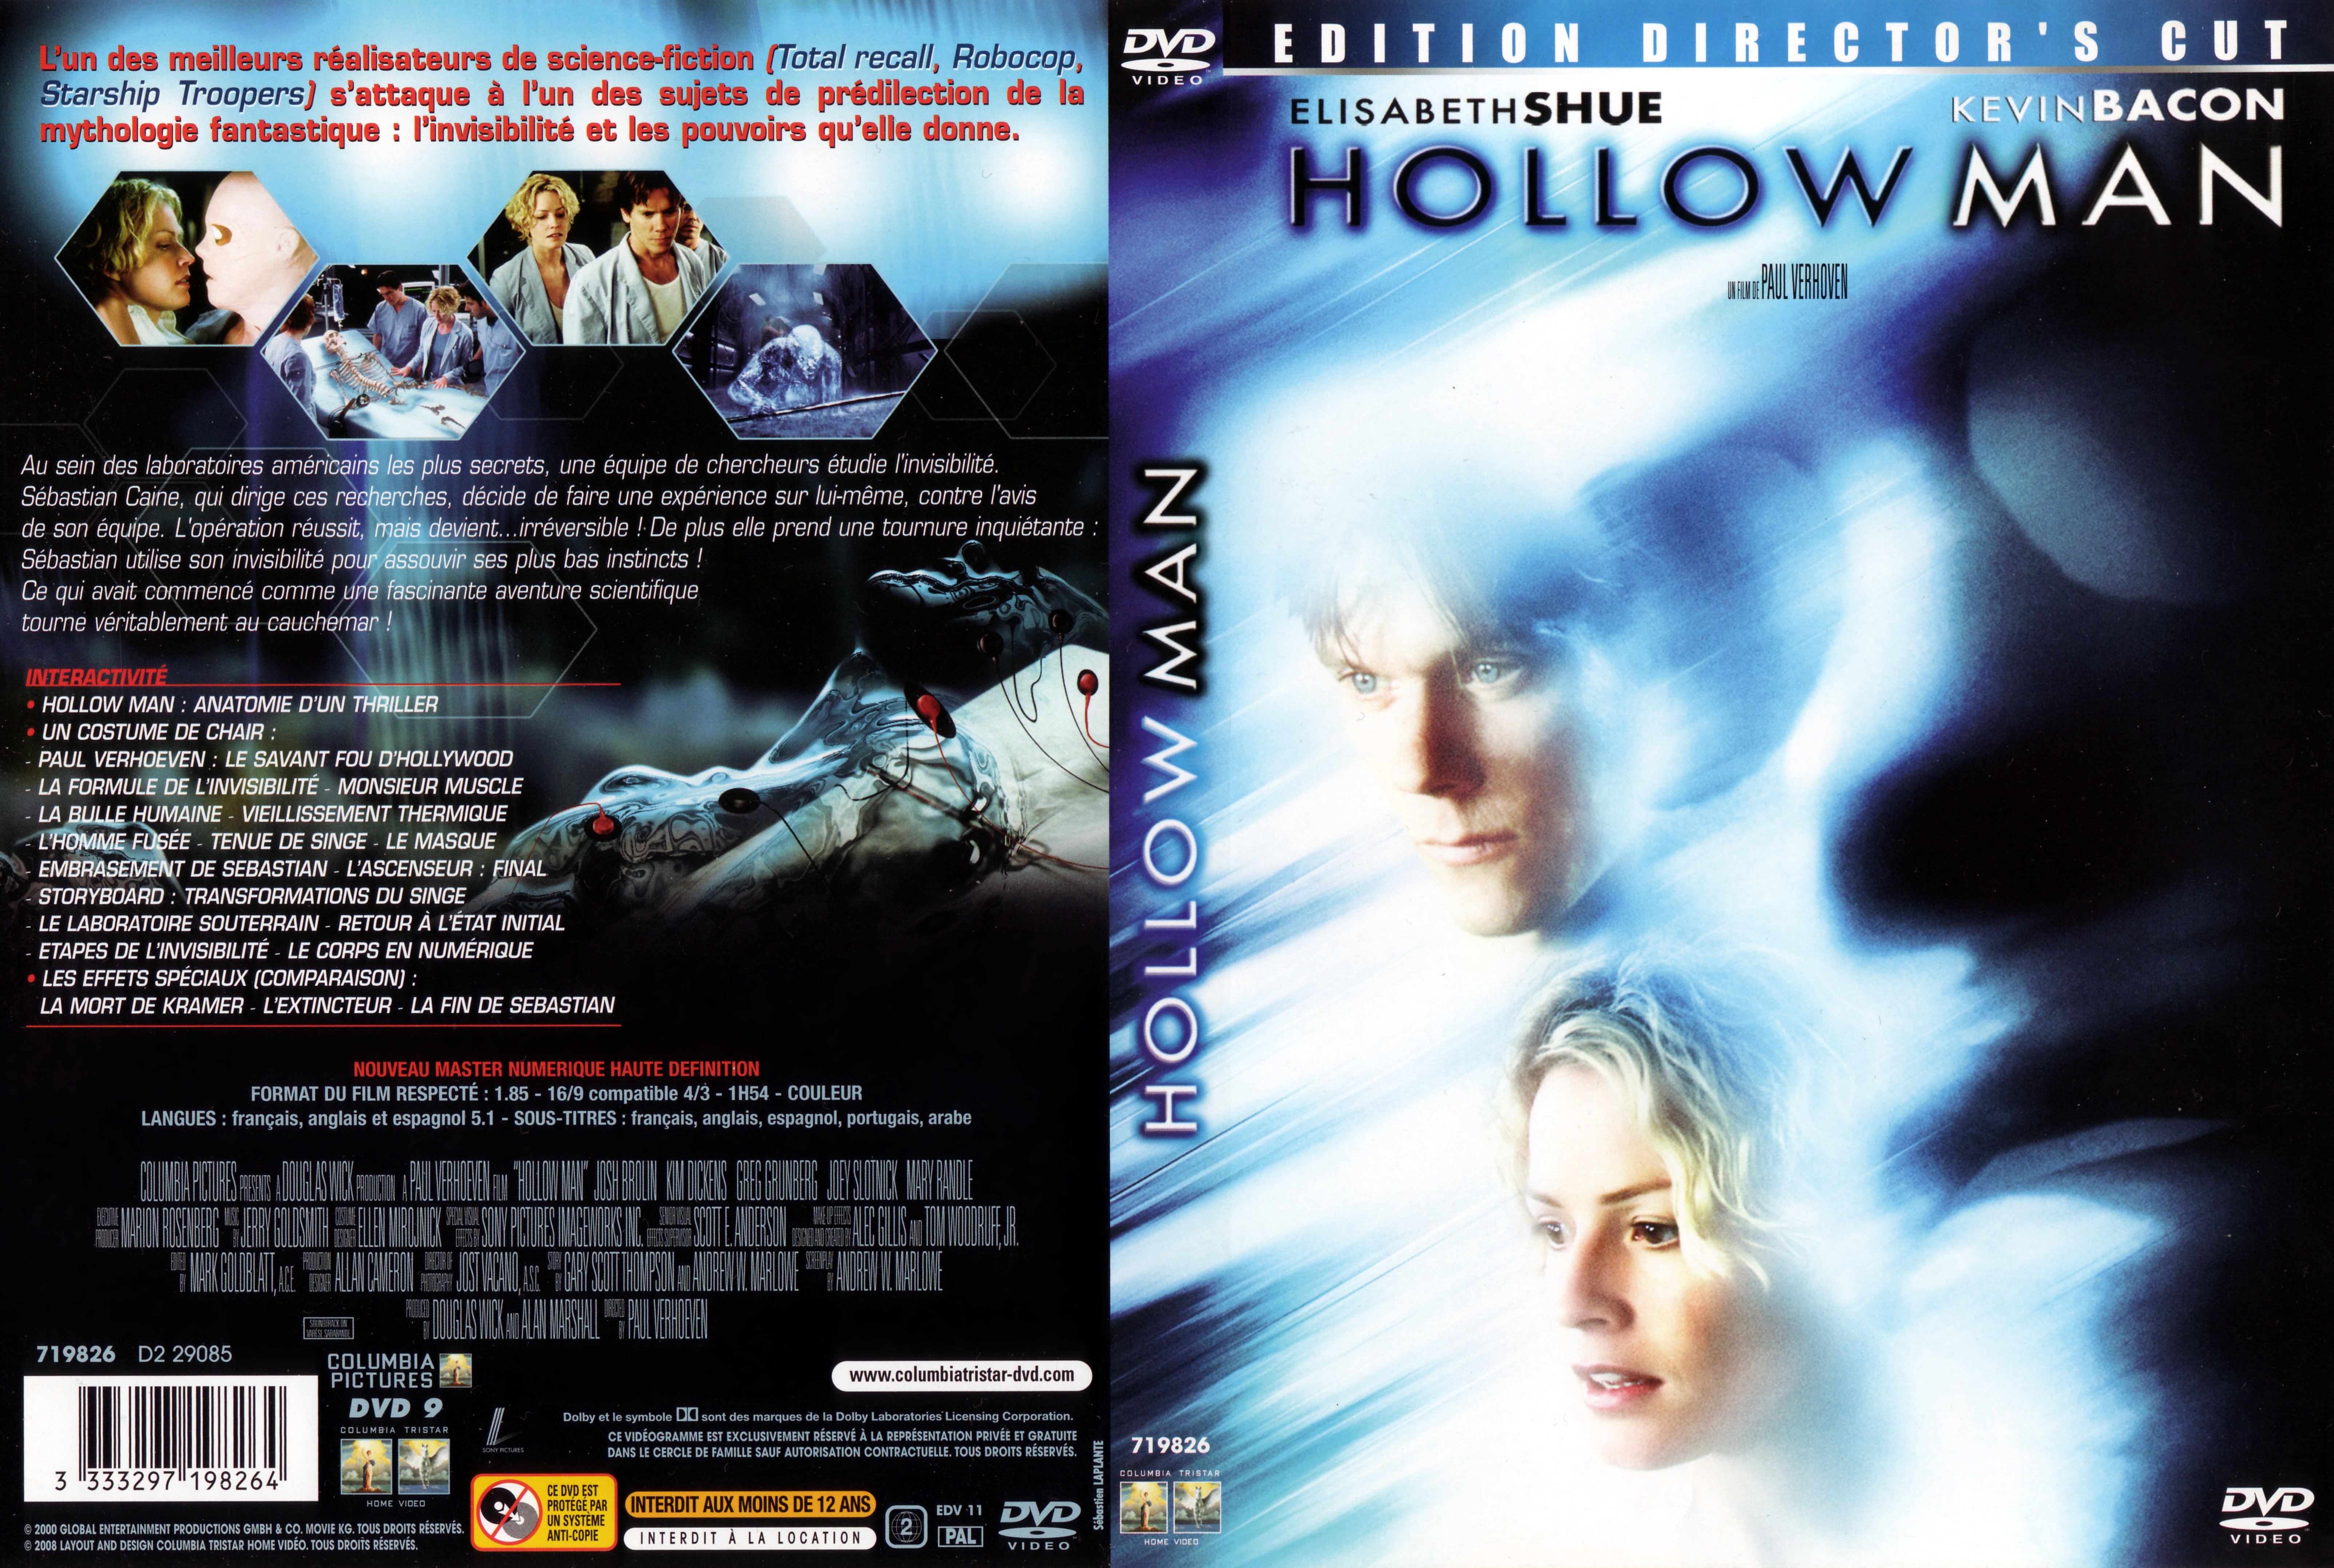 Jaquette DVD Hollow man v3